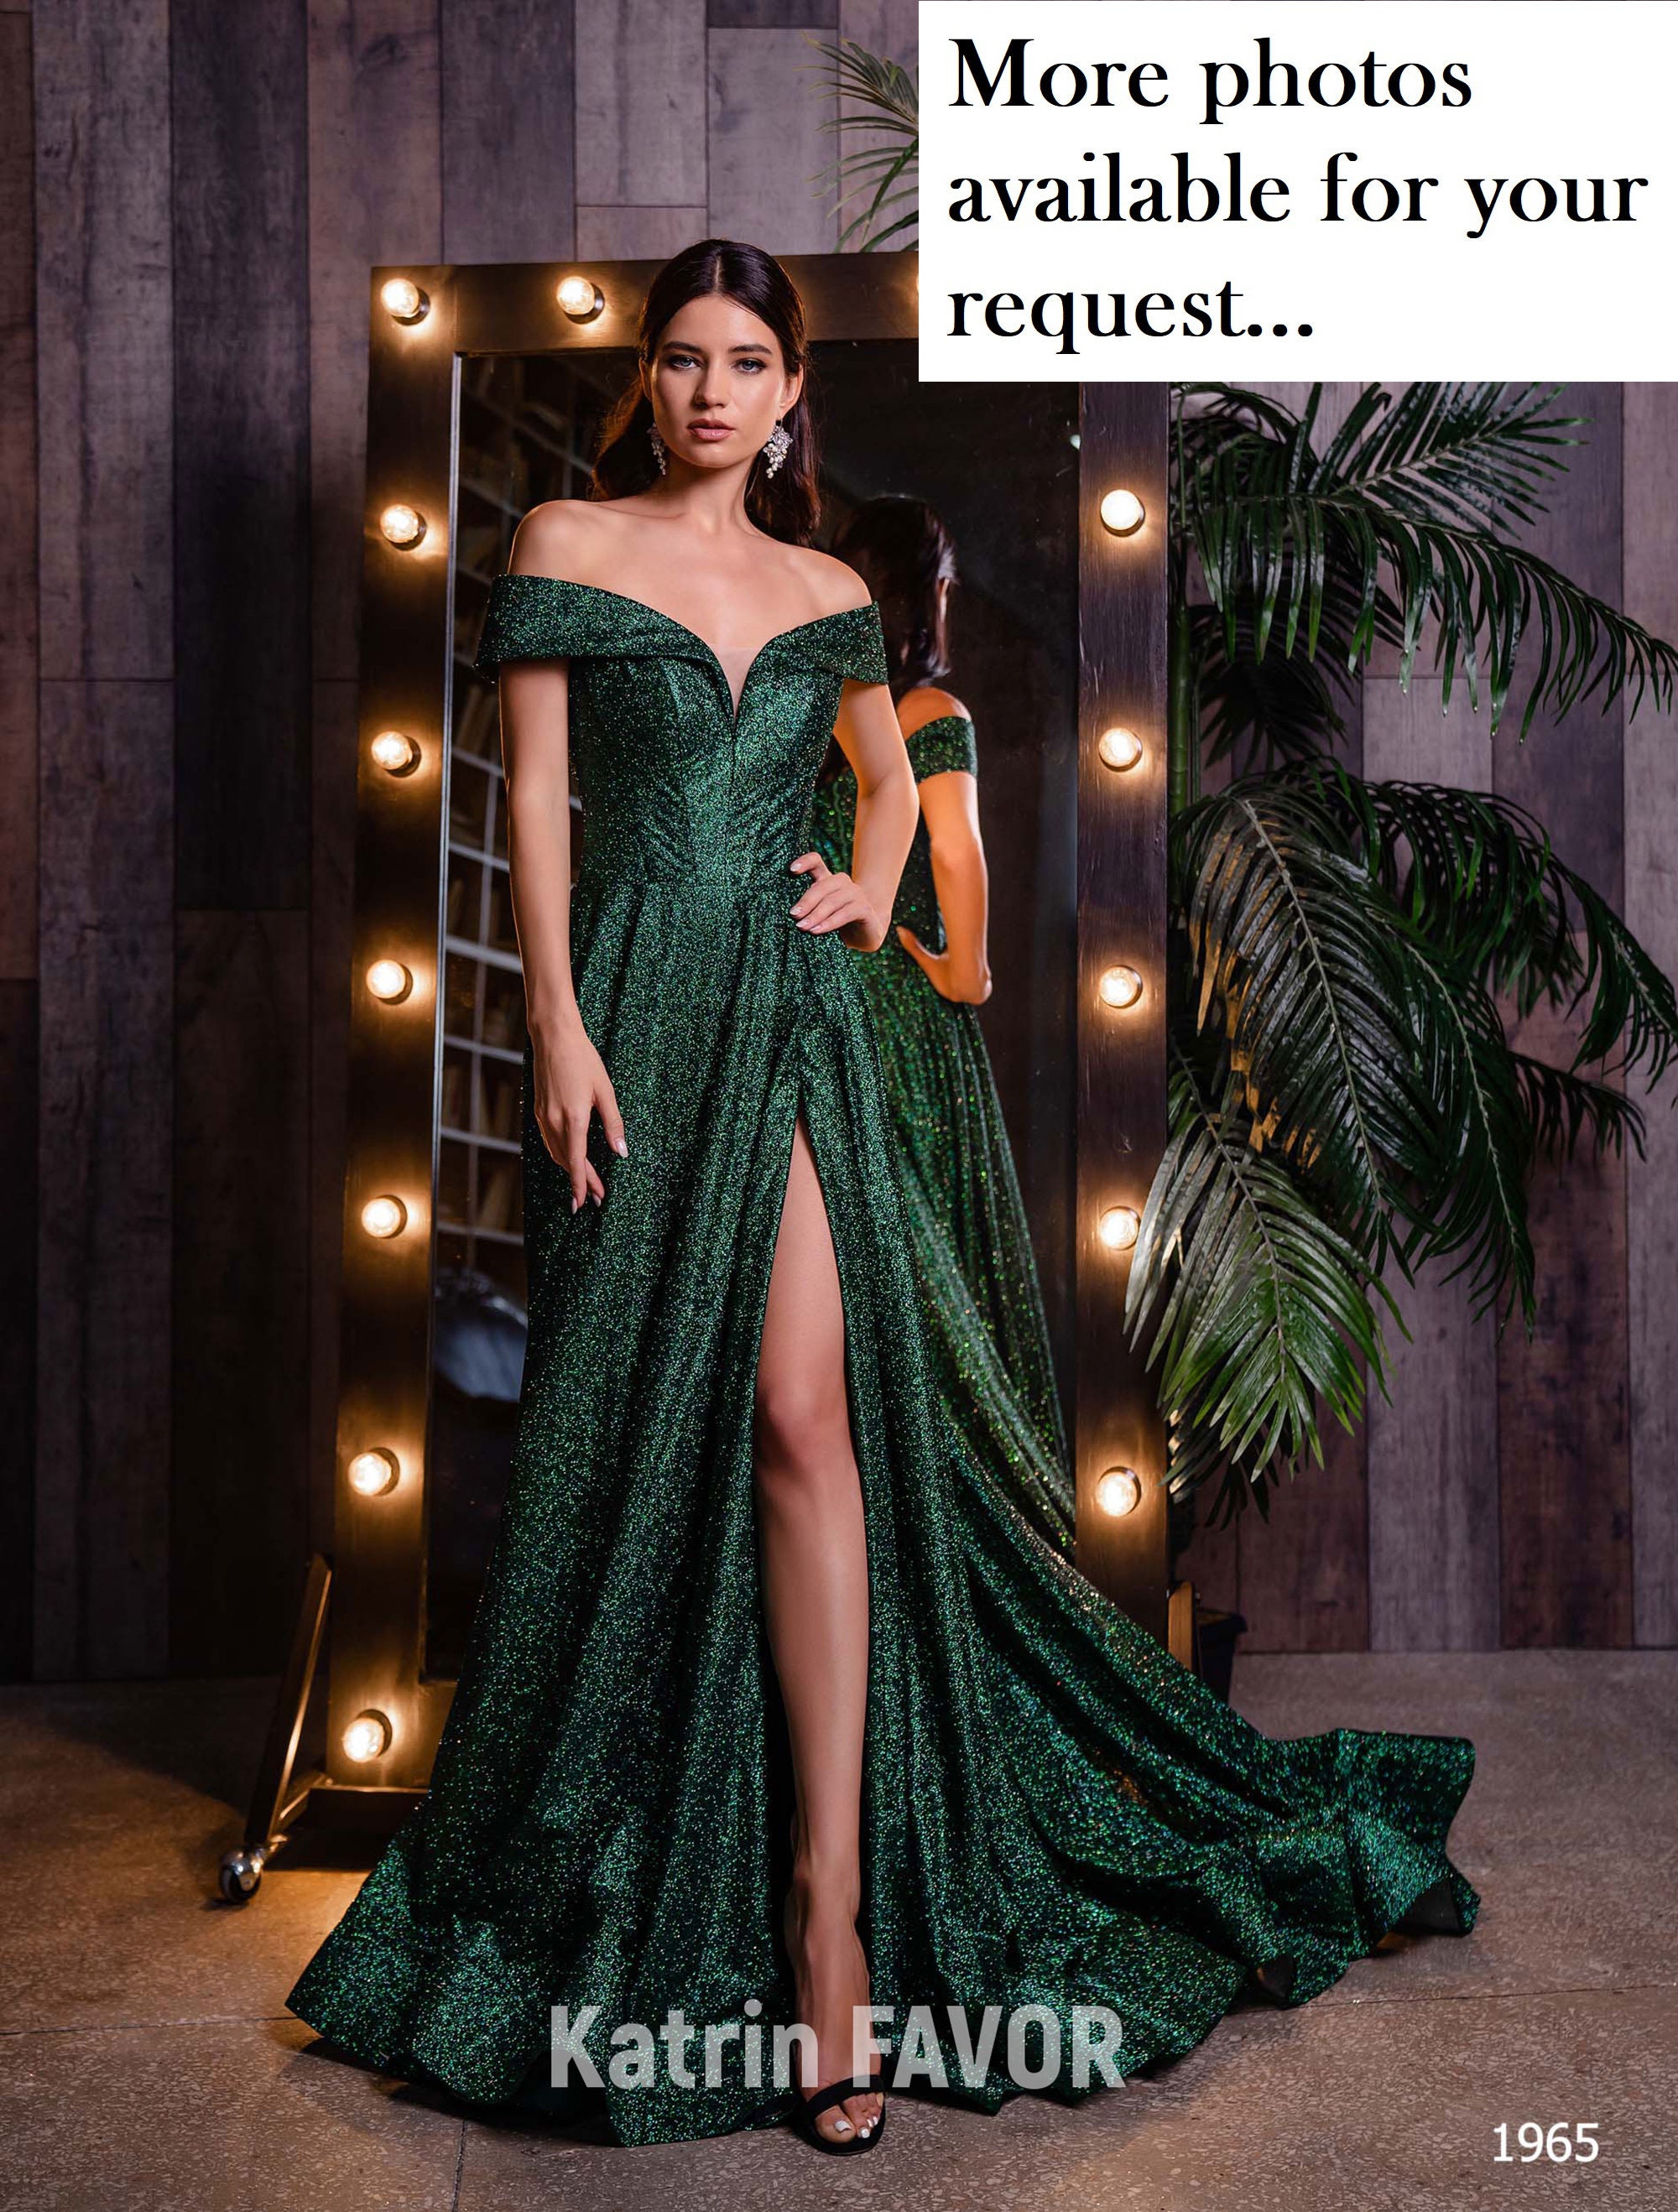 eksekverbar beruset Koordinere Green Prom Dress Long Corset Plus Size Prom Dress Sparkly - Etsy